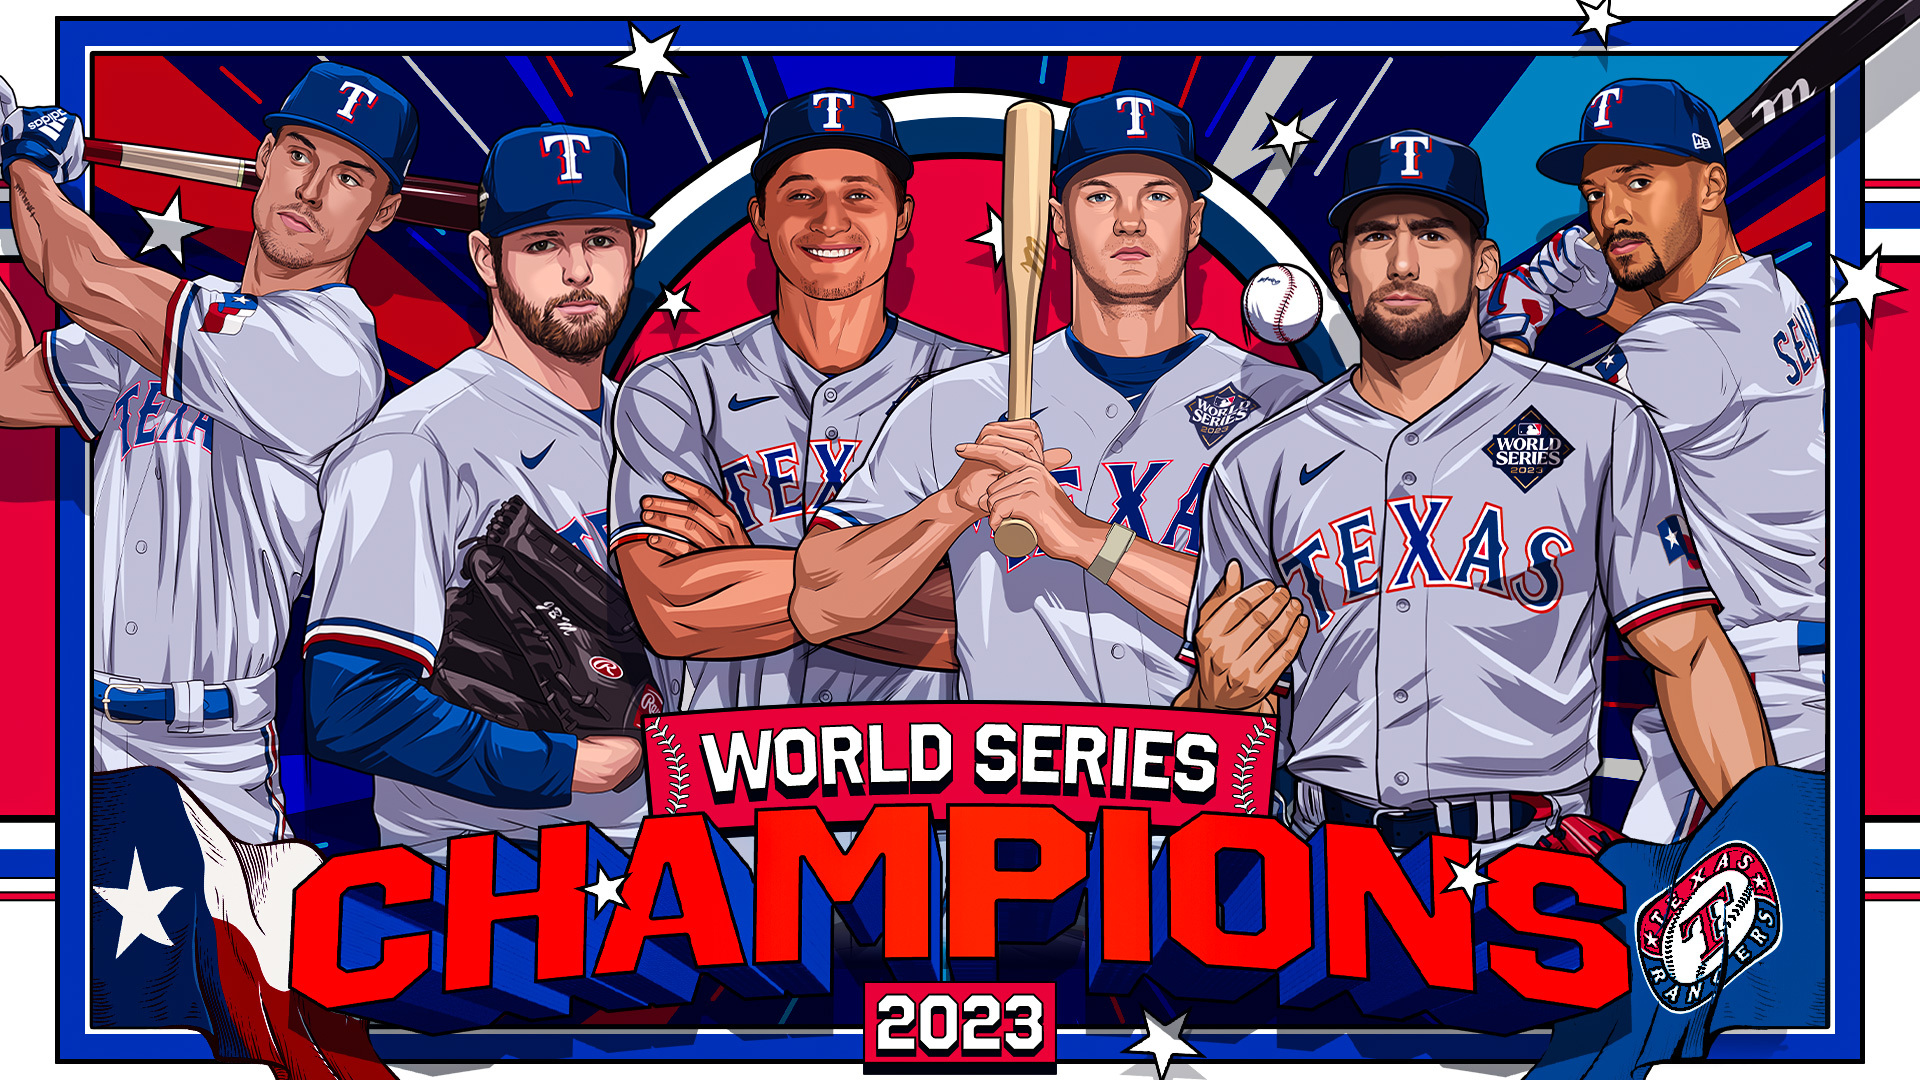 Texas Rangers beat Diamondbacks to win World Series for first time